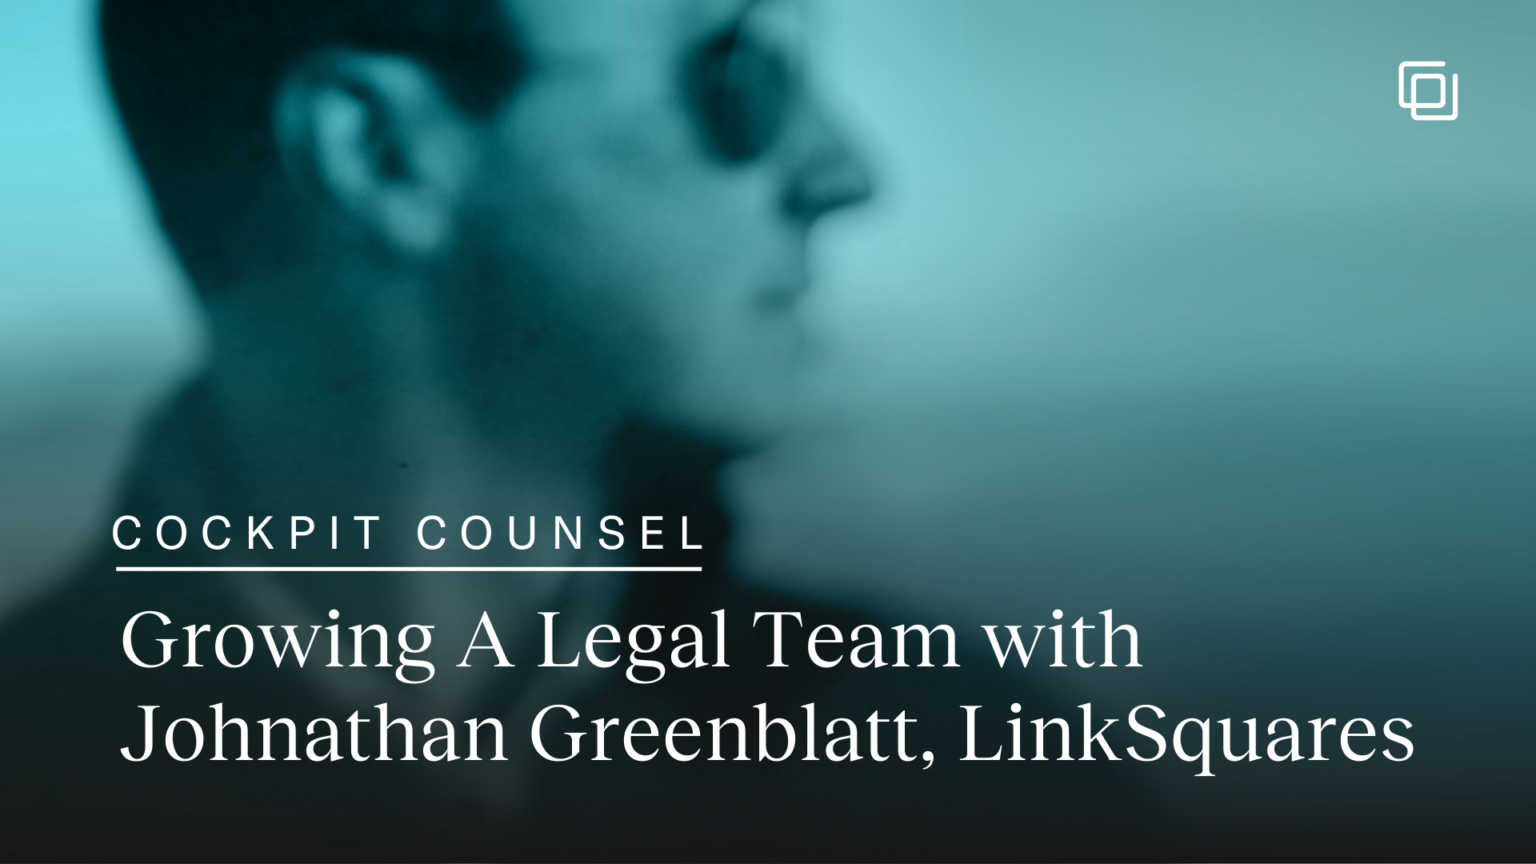 Cockpit Counsel: Growing A Legal Team with Jonathan Greenblatt